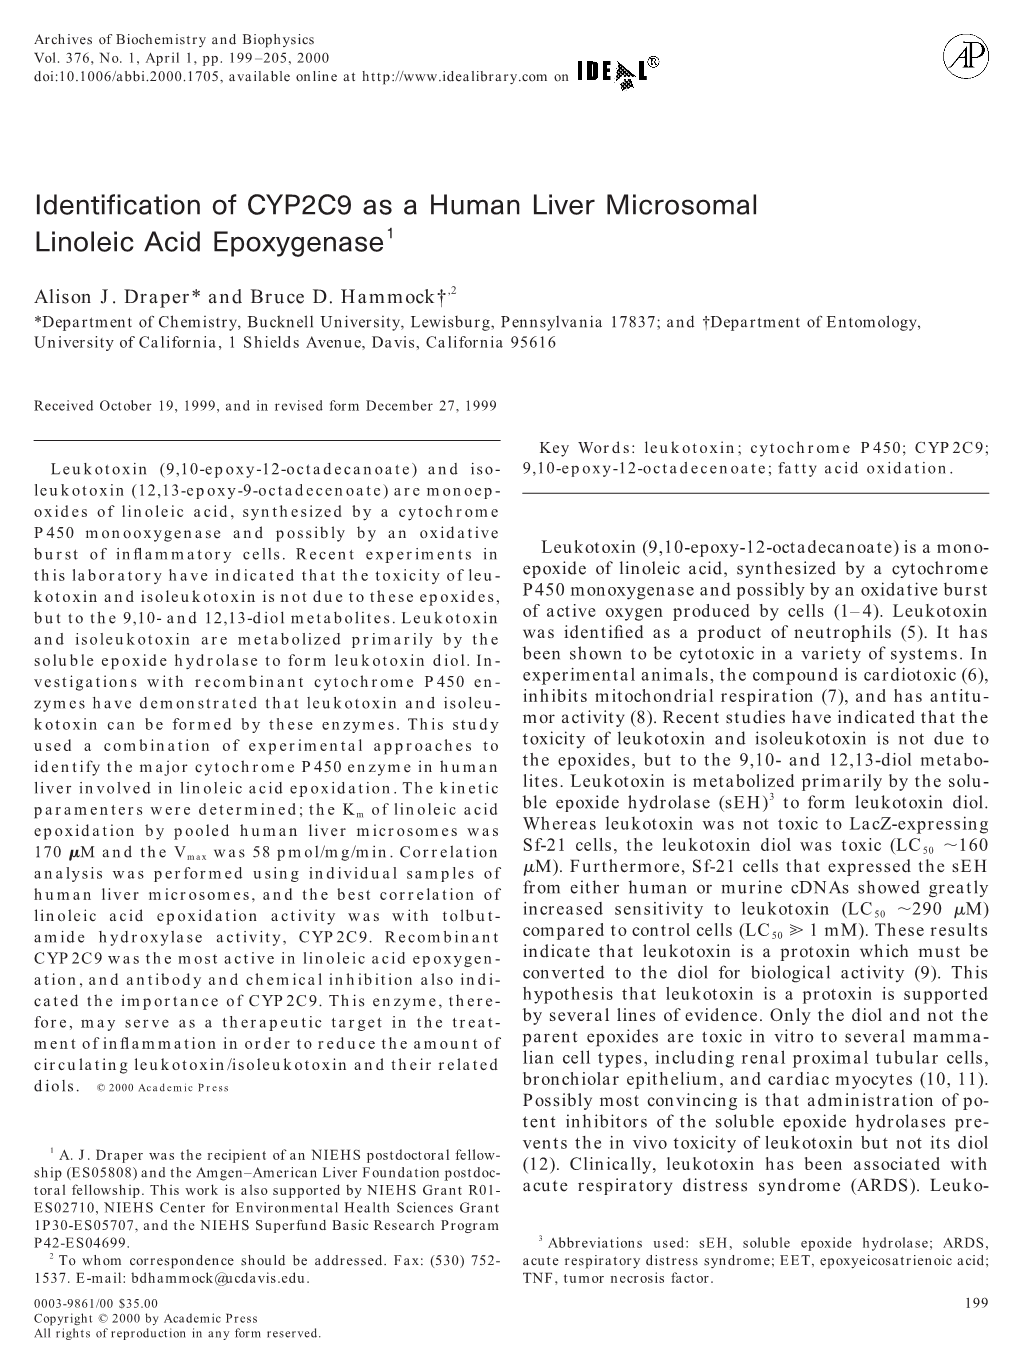 Identification of CYP2C9 As a Human Liver Microsomal Linoleic Acid Epoxygenase1